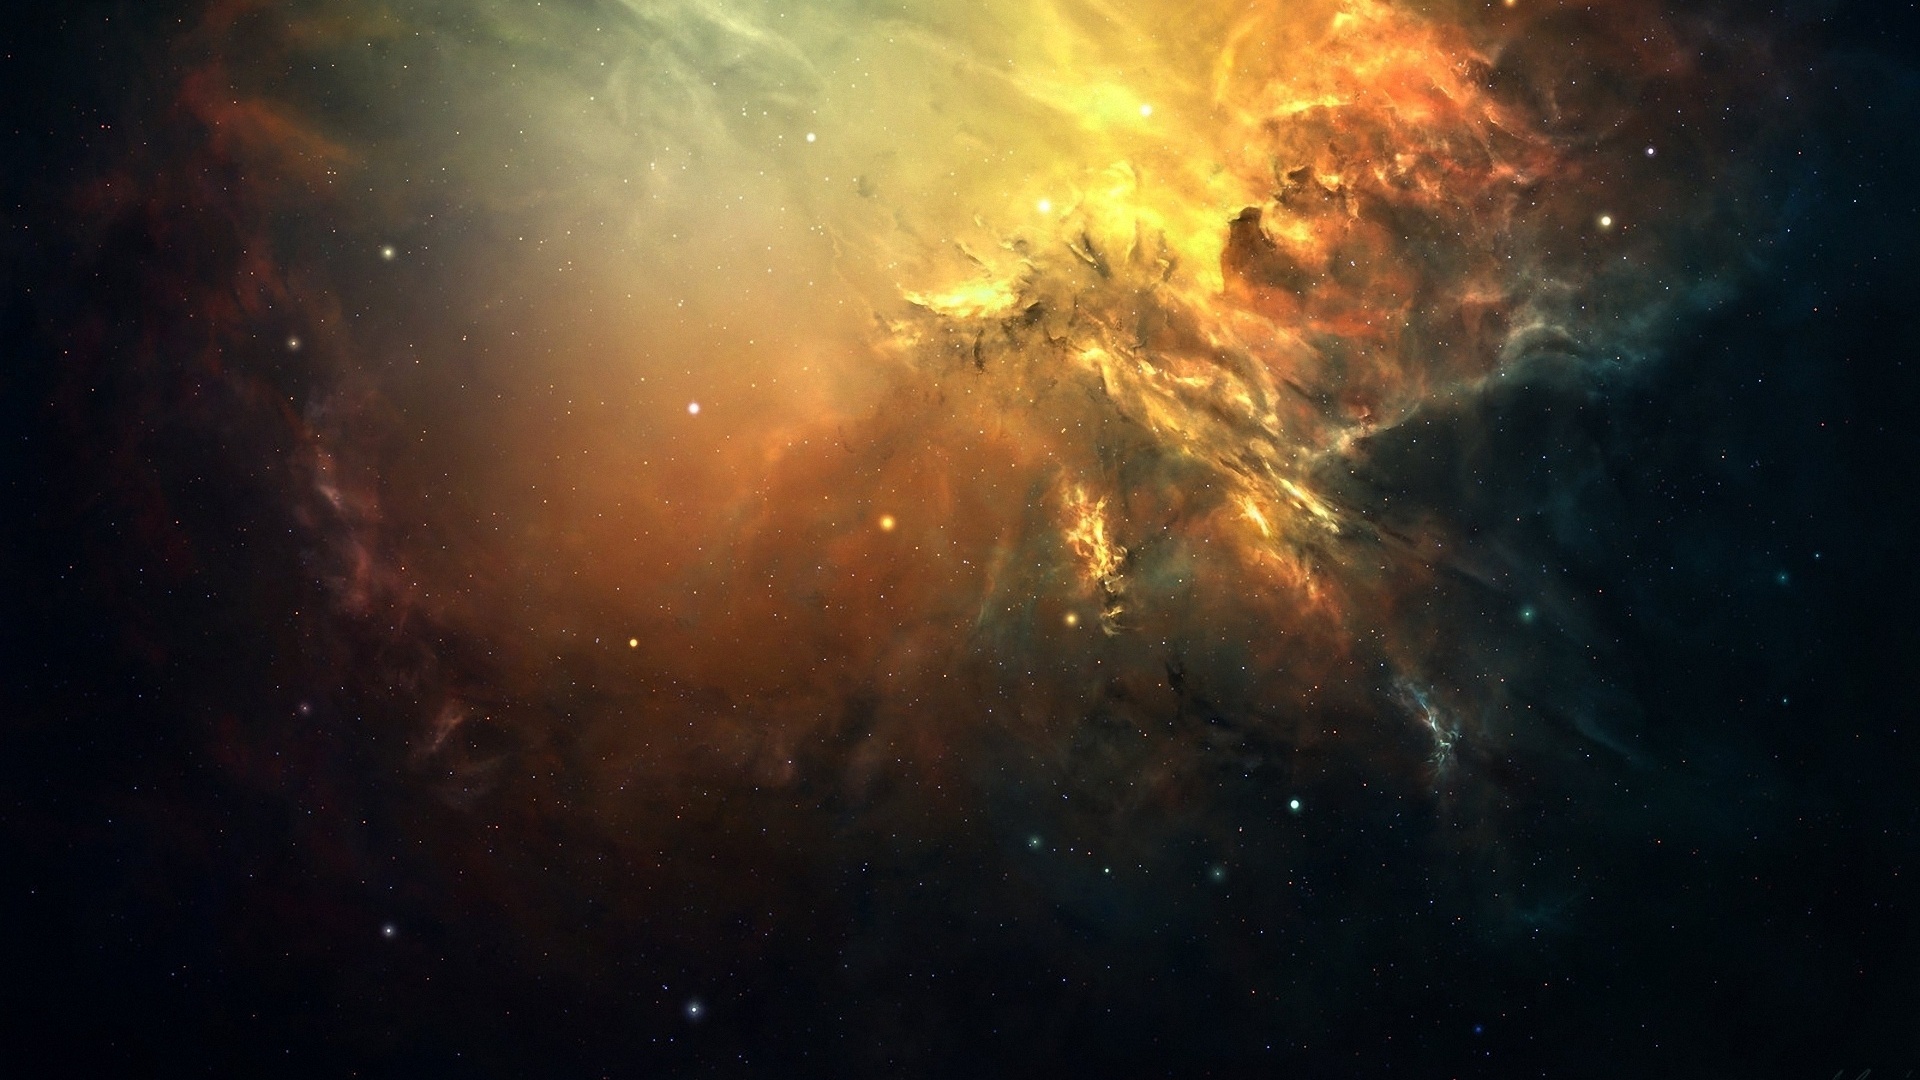 Sci Fi Nebula HD Wallpaper by 2012 danich01